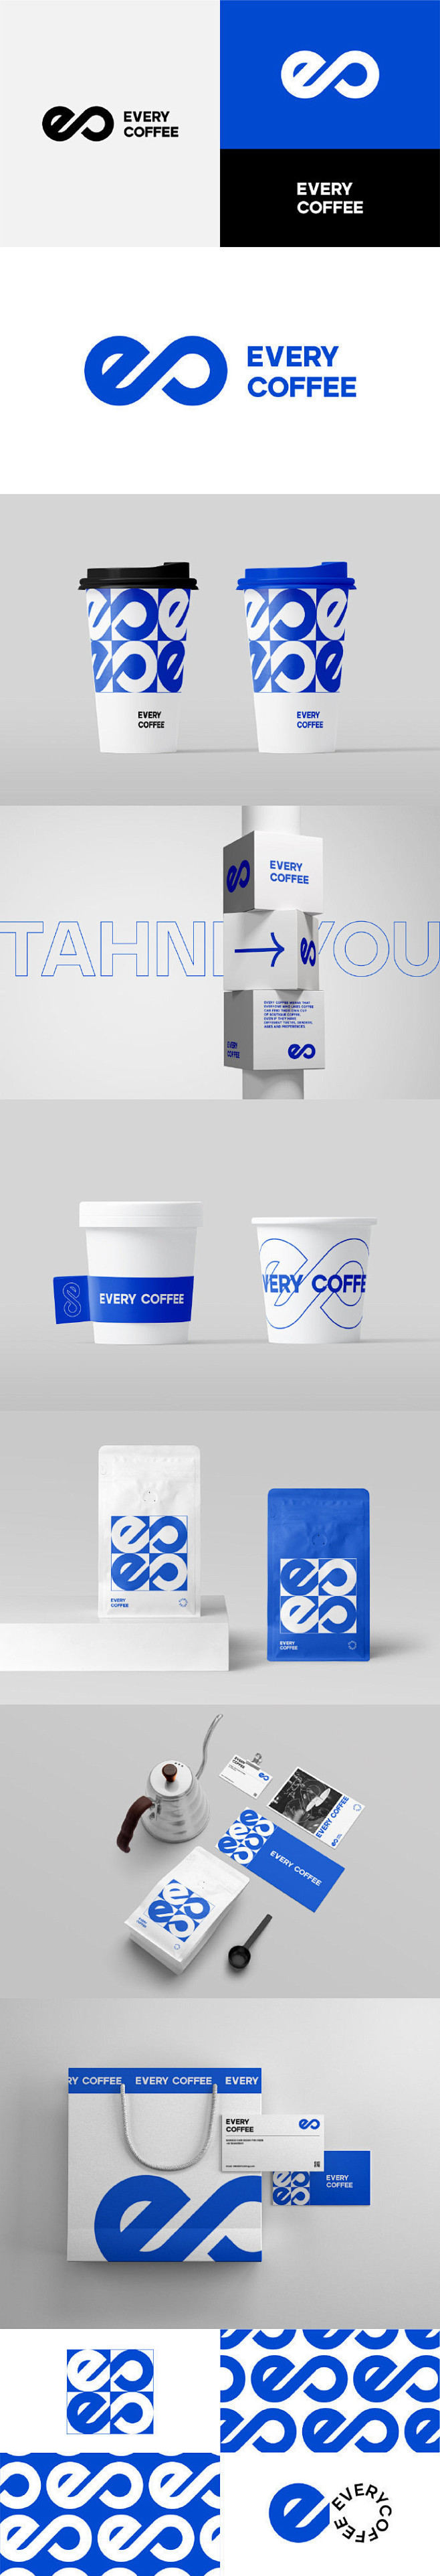 Every coffee丨咖啡品牌log...